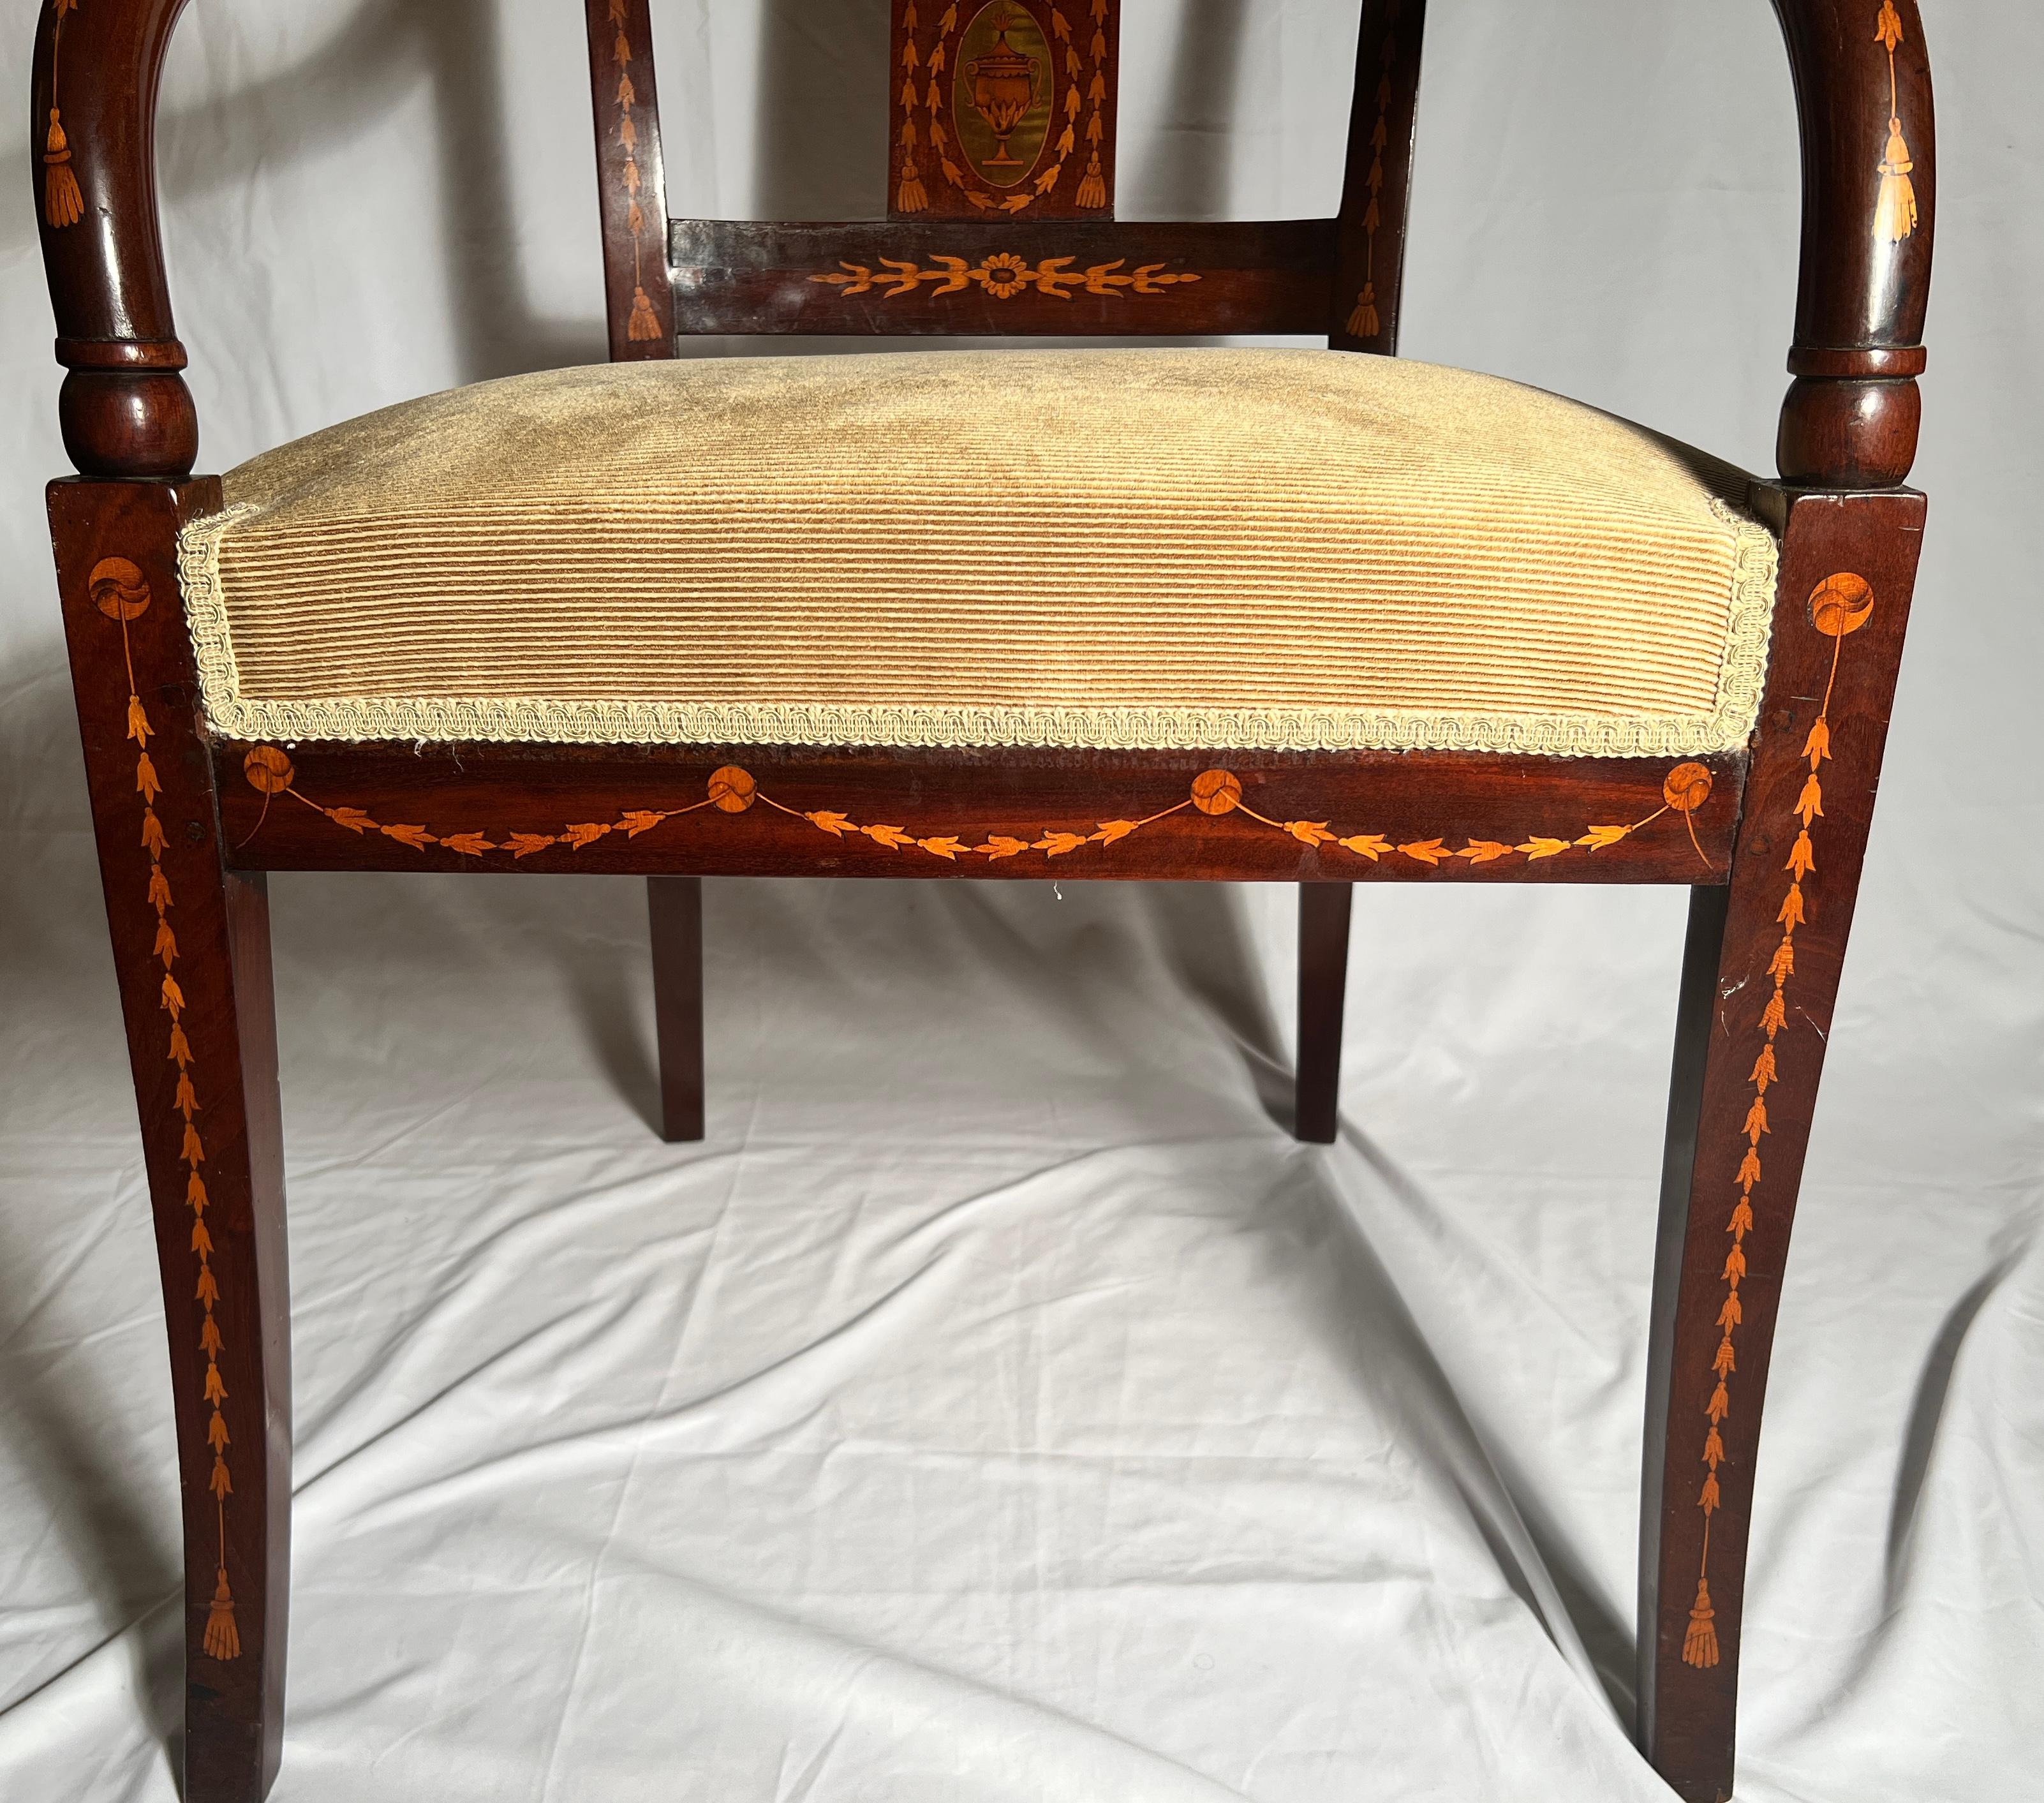 Antique Mahogany “Louis Philippe” Desk Chair Voltaire c 1830-50
